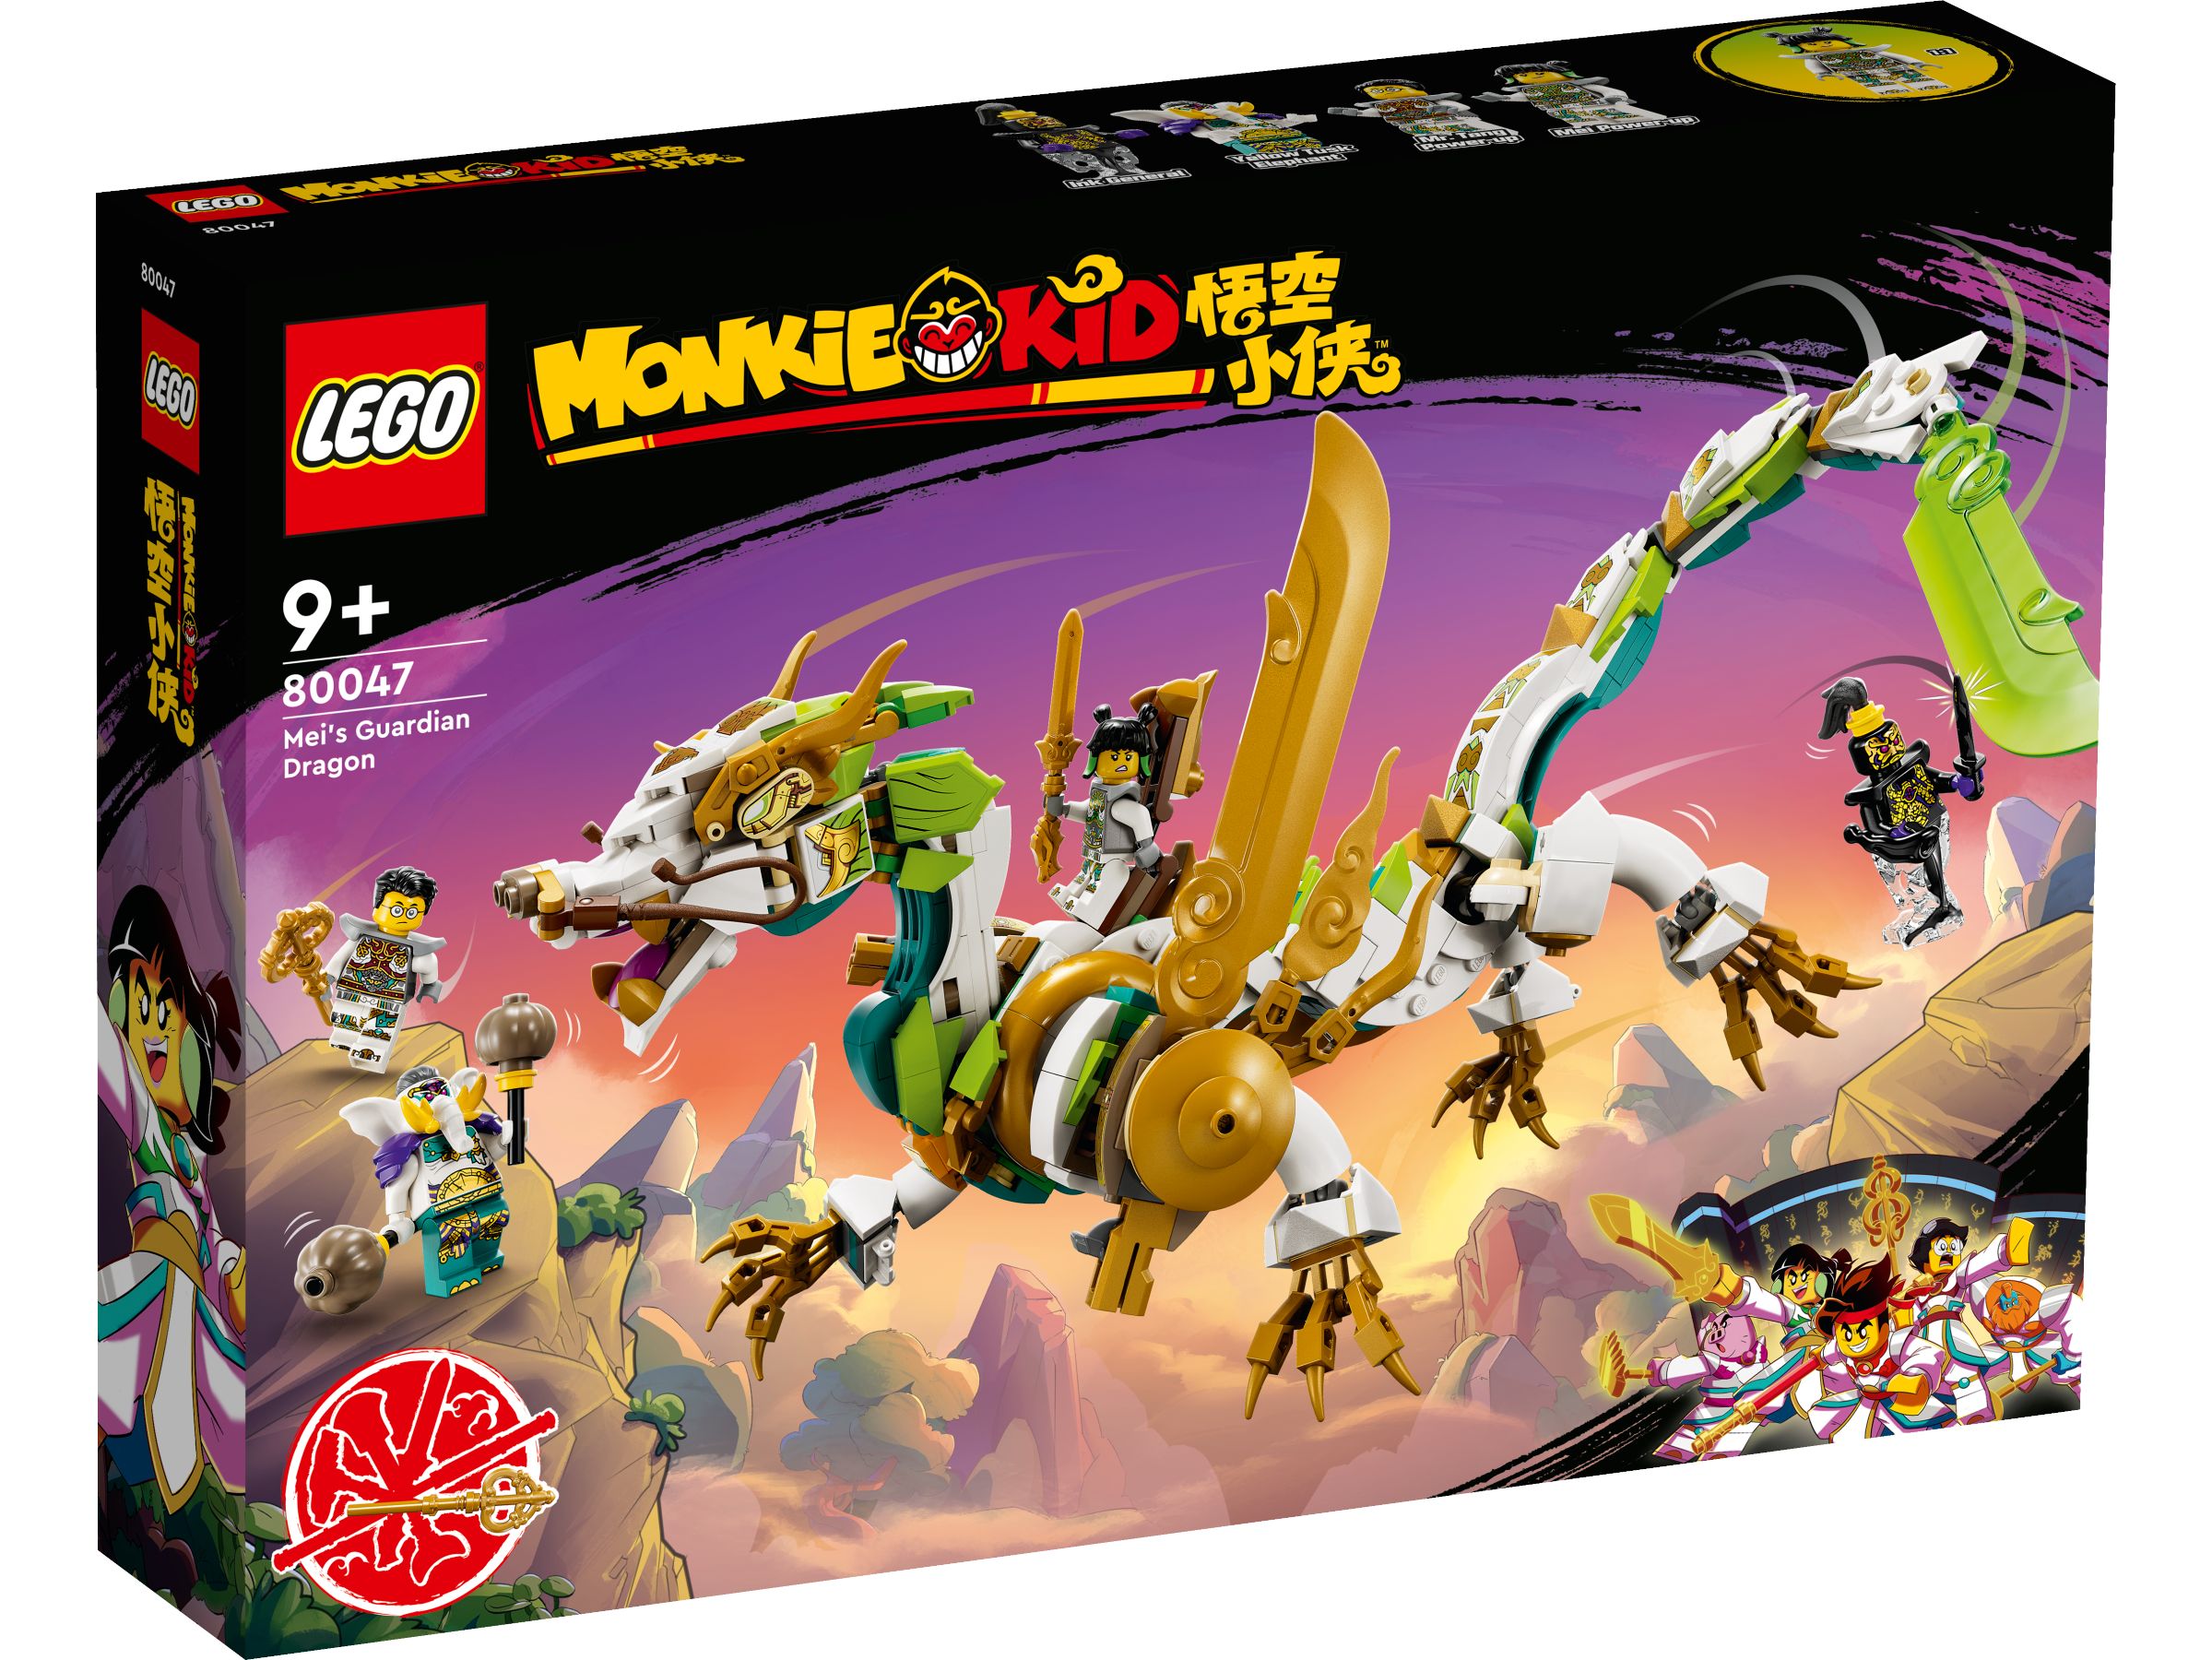 LEGO Monkie Kid 80047 Meis Schutzdrache LEGO_80047_Box1_v29.jpg